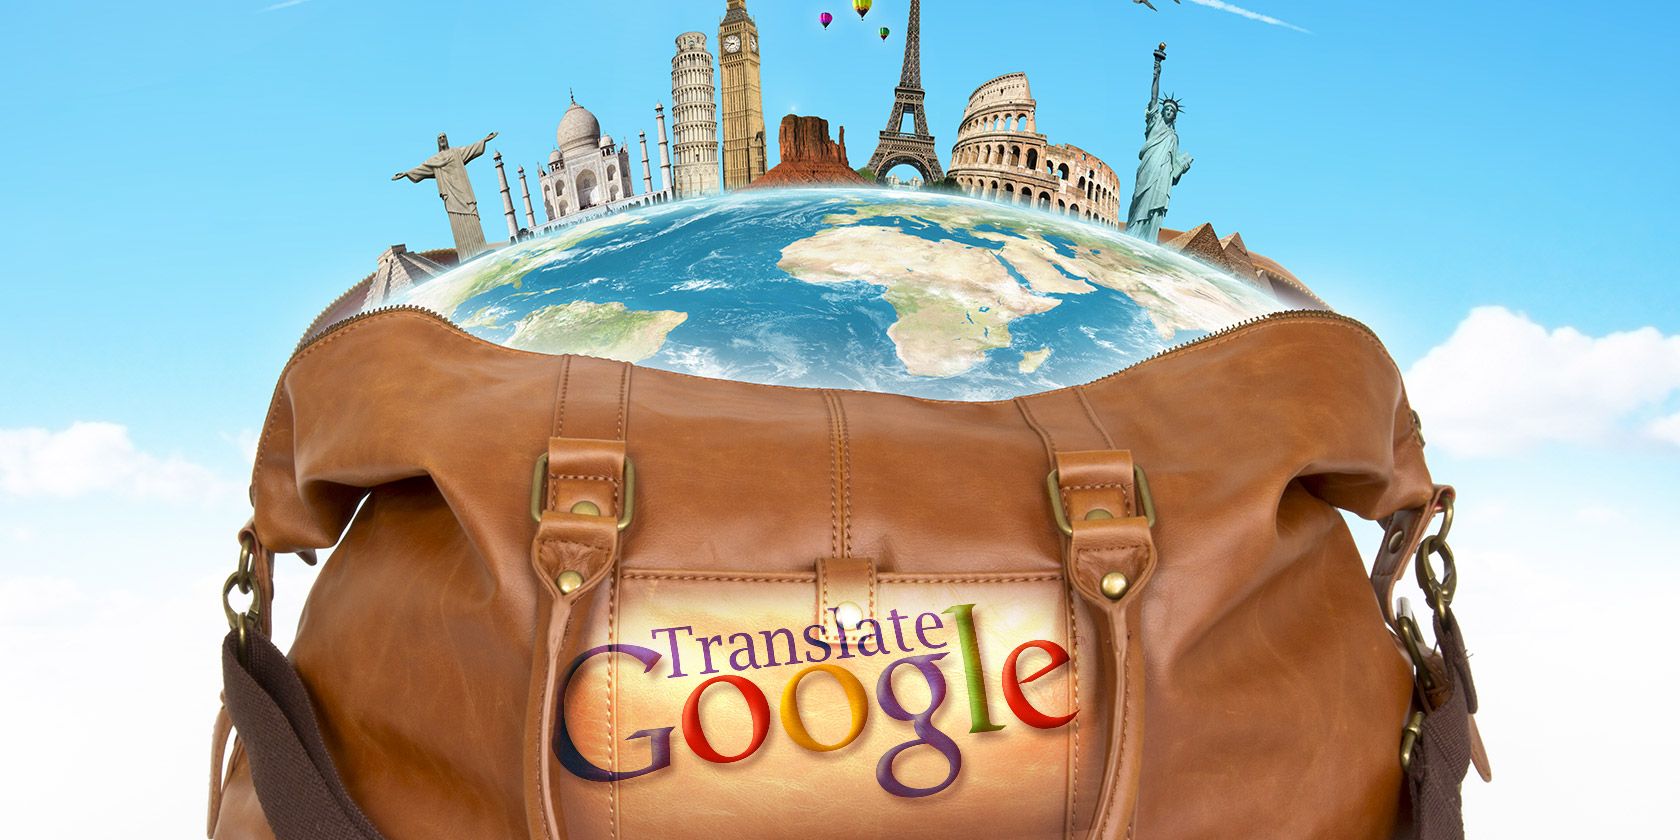 travel over translate